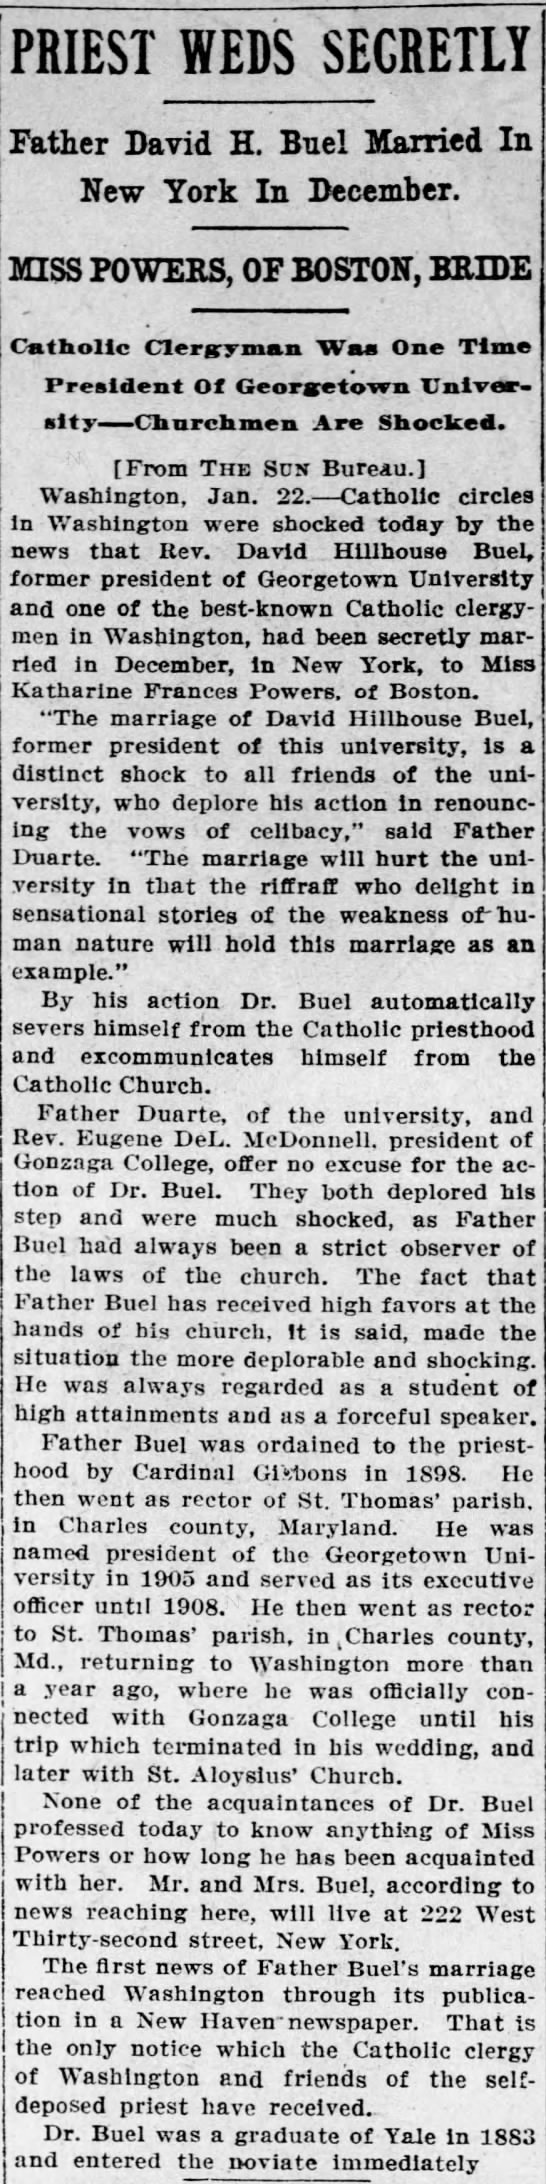 The Baltimore Sun. January 23, 1913. p. 1 - 